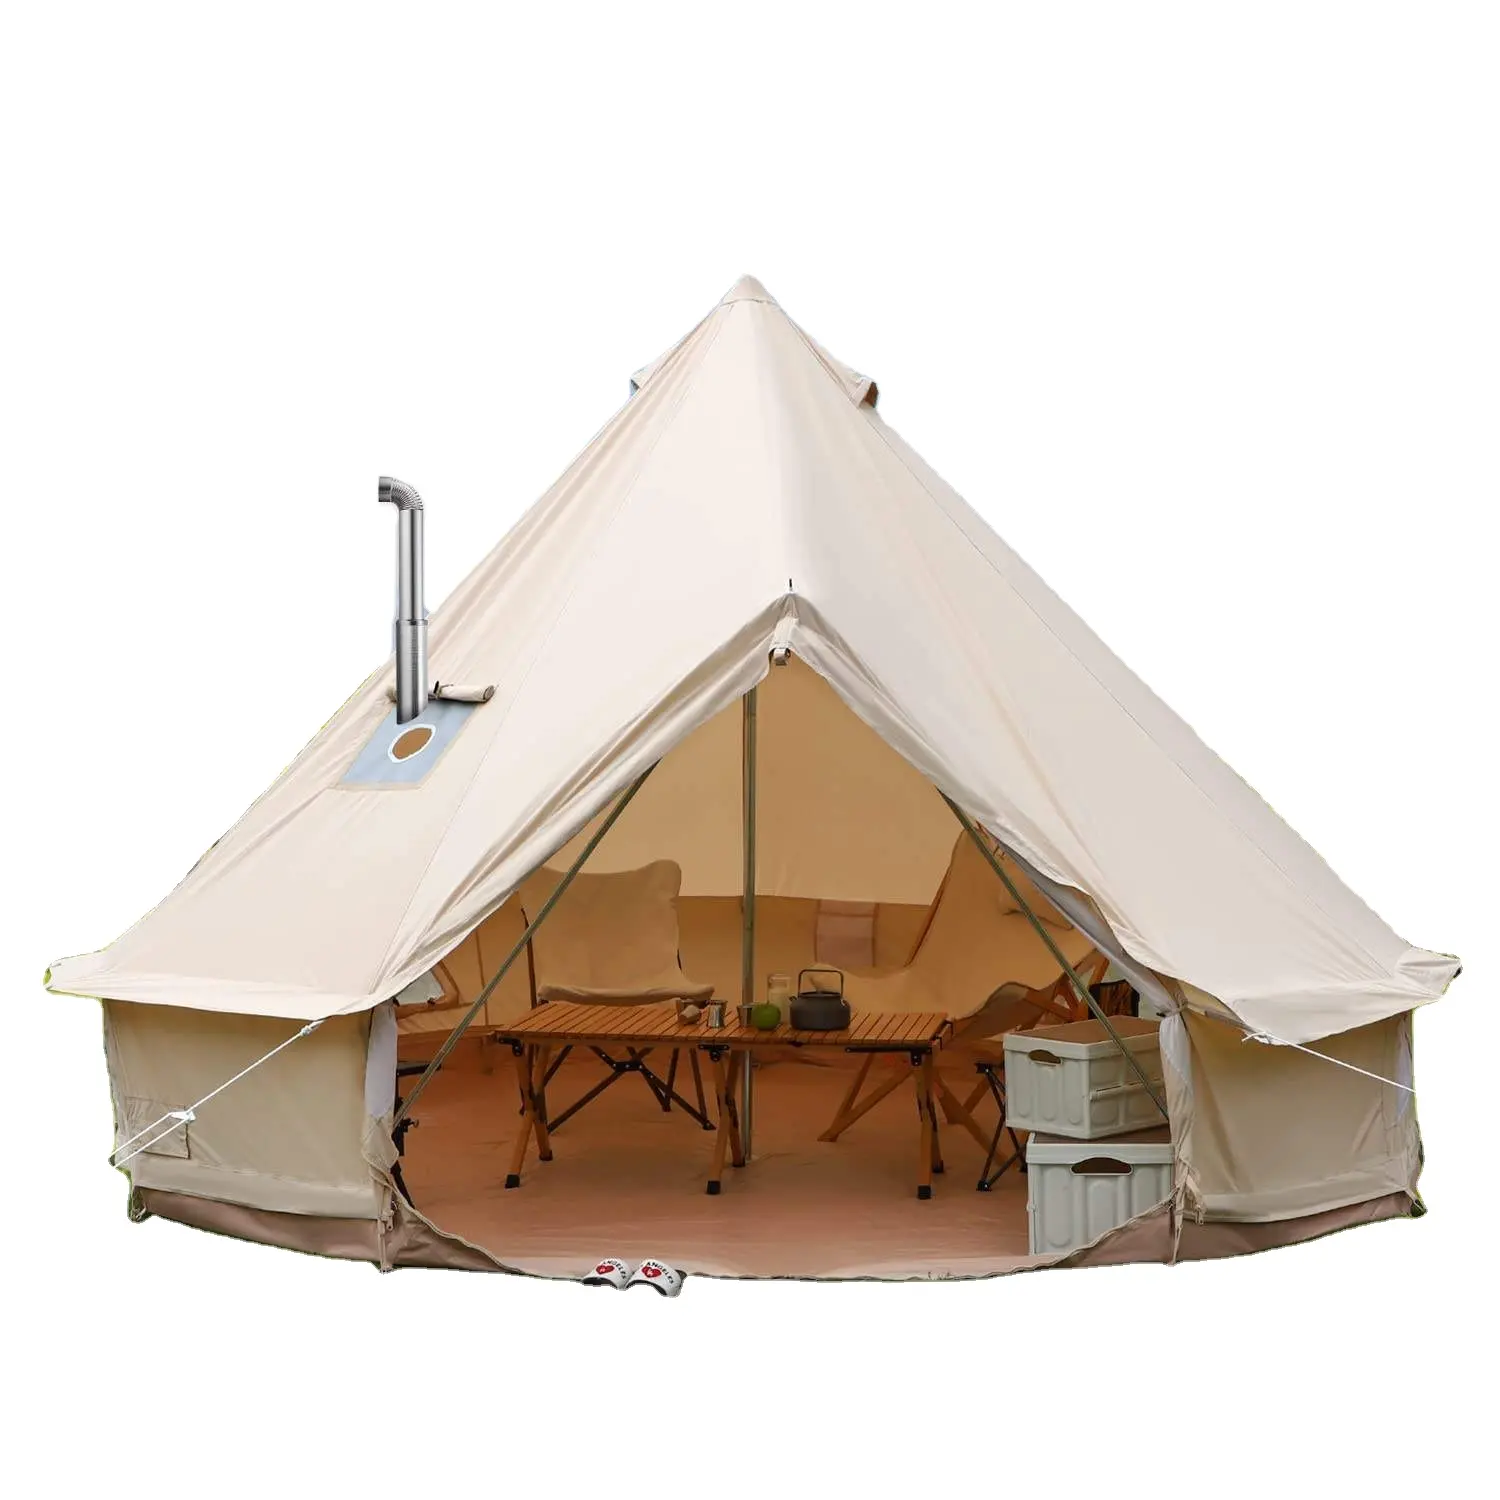 Özel Sailcloth glaglabeyaz yuvarlak su geçirmez lüks tuval duvar kamp çadırı